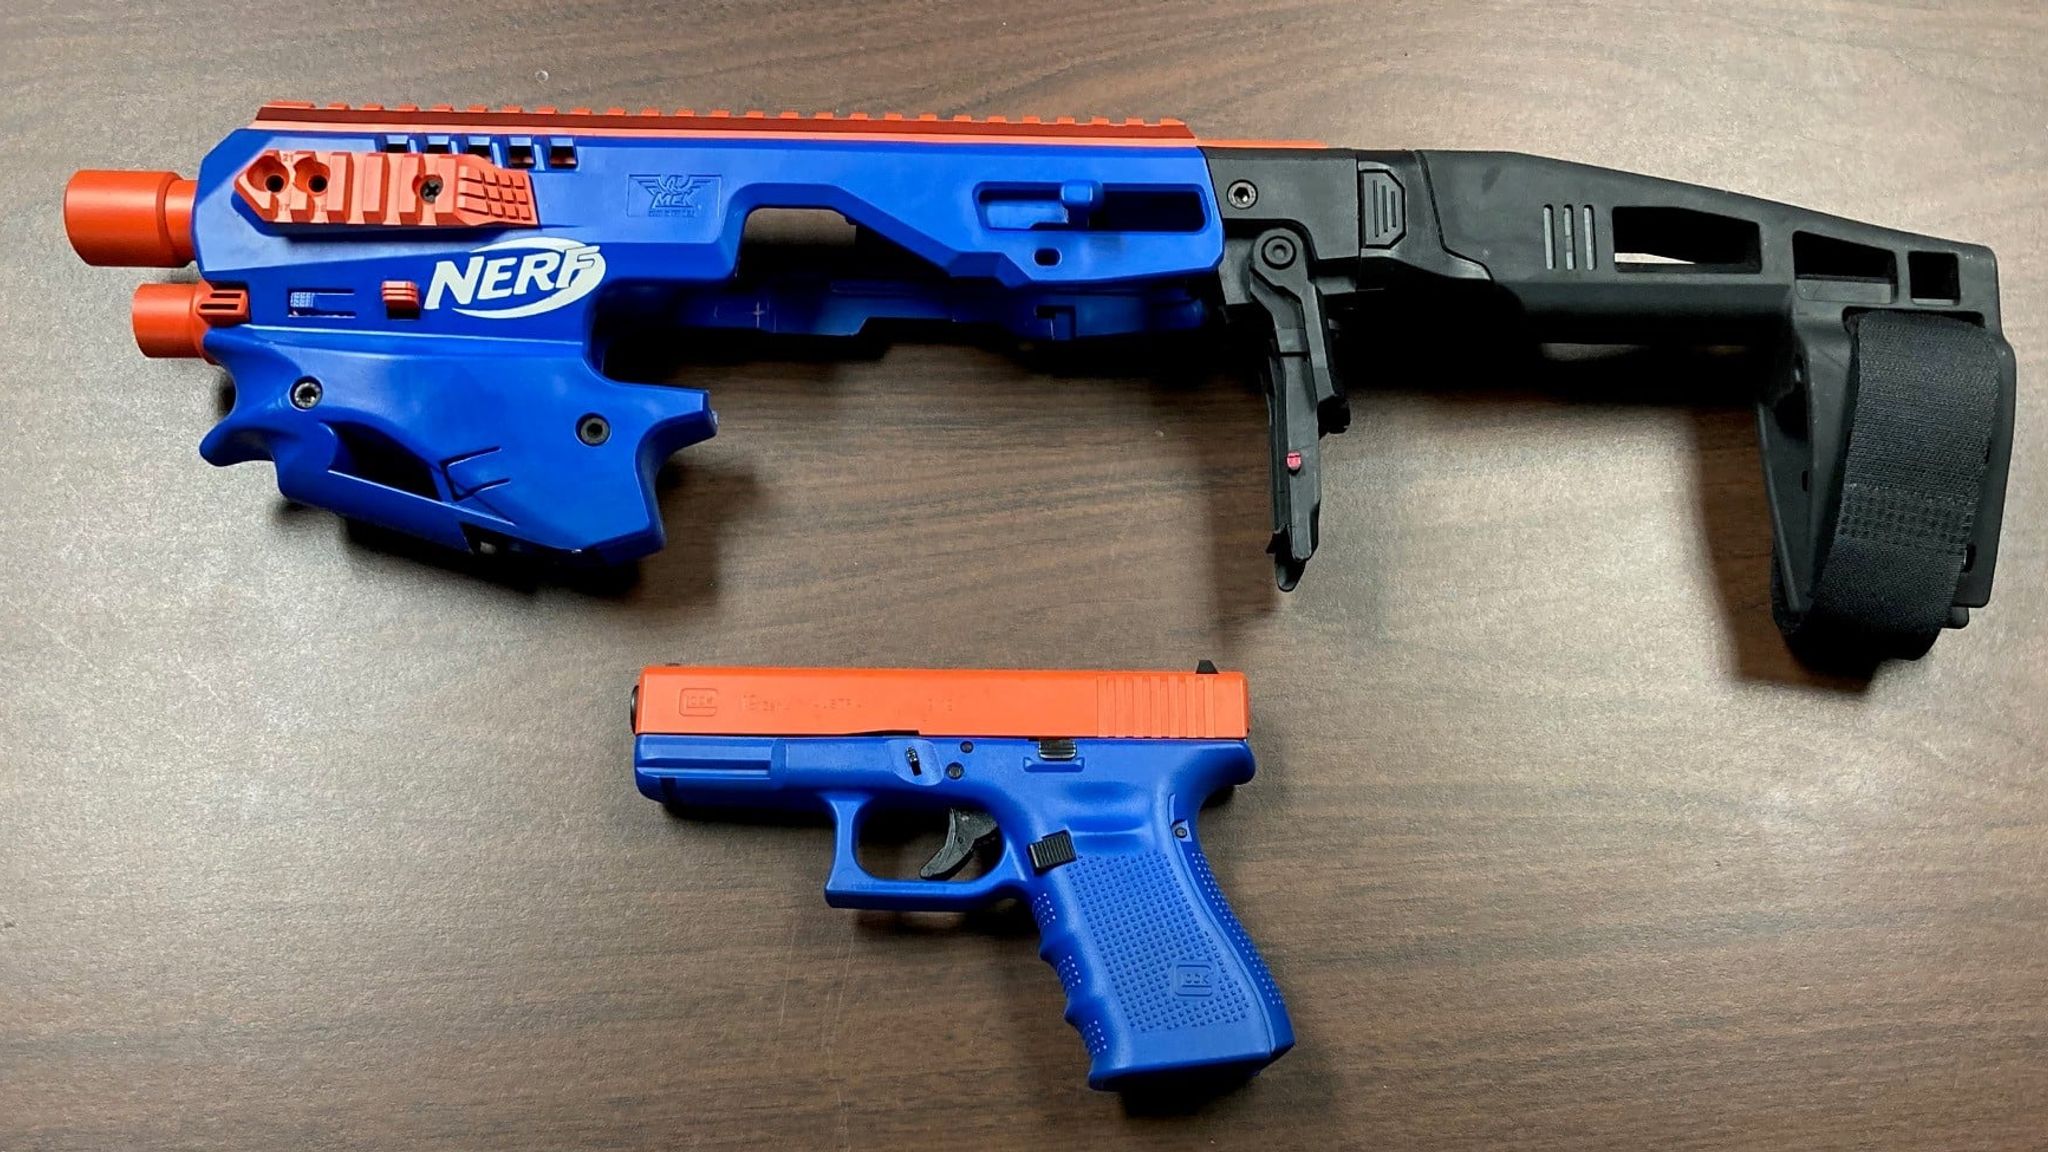 North Carolina Police Seize Real Gun Disguised As Nerf Toy During Drug